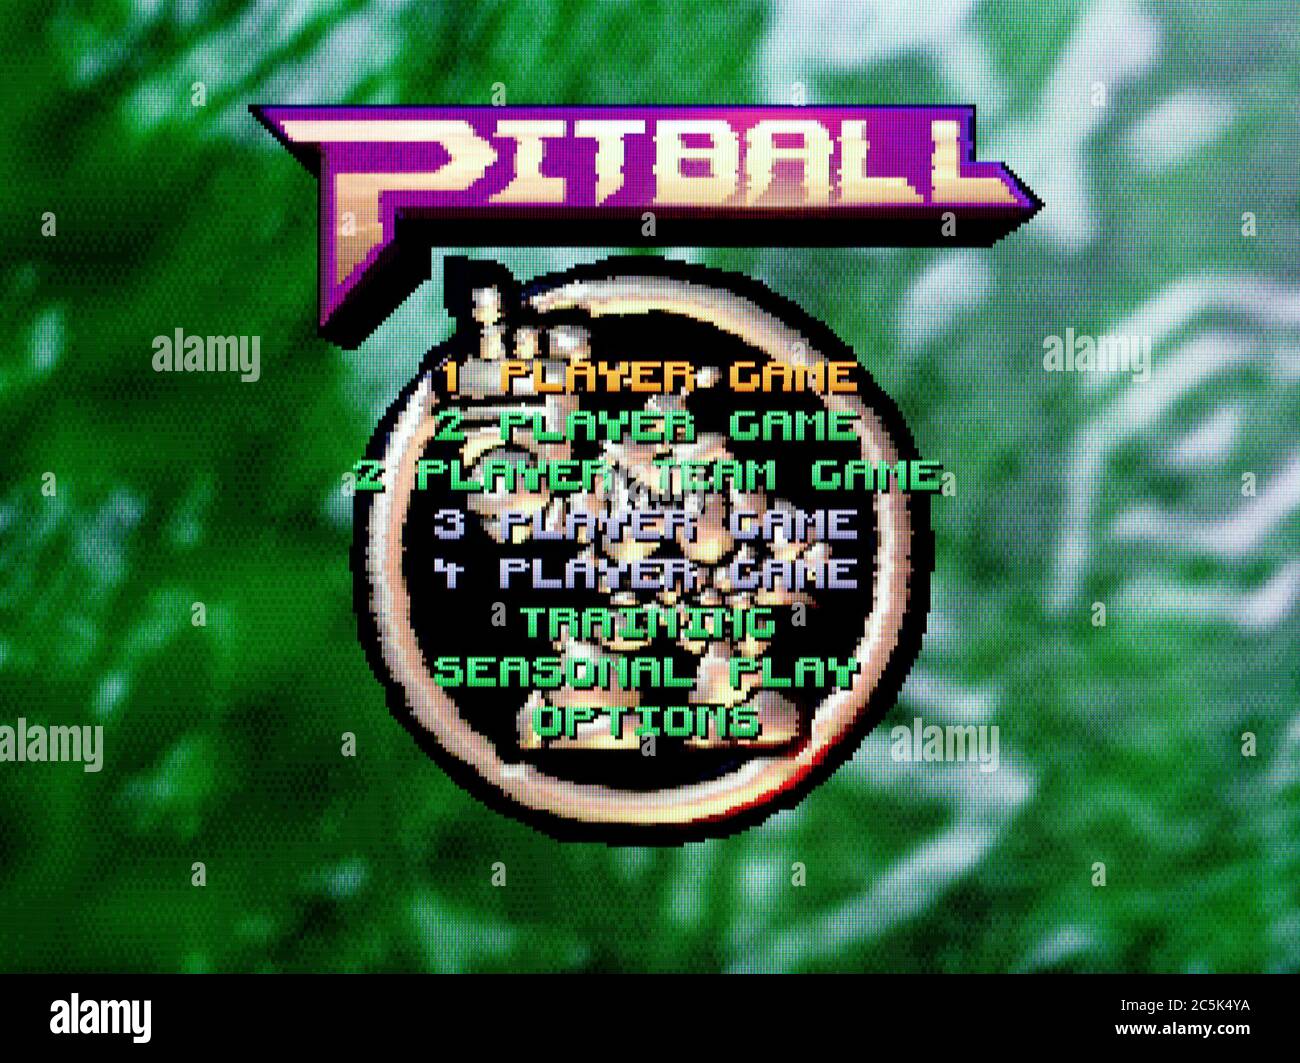 Pitball - Sony PlayStation 1 PS1 PSX - usage éditorial uniquement Banque D'Images